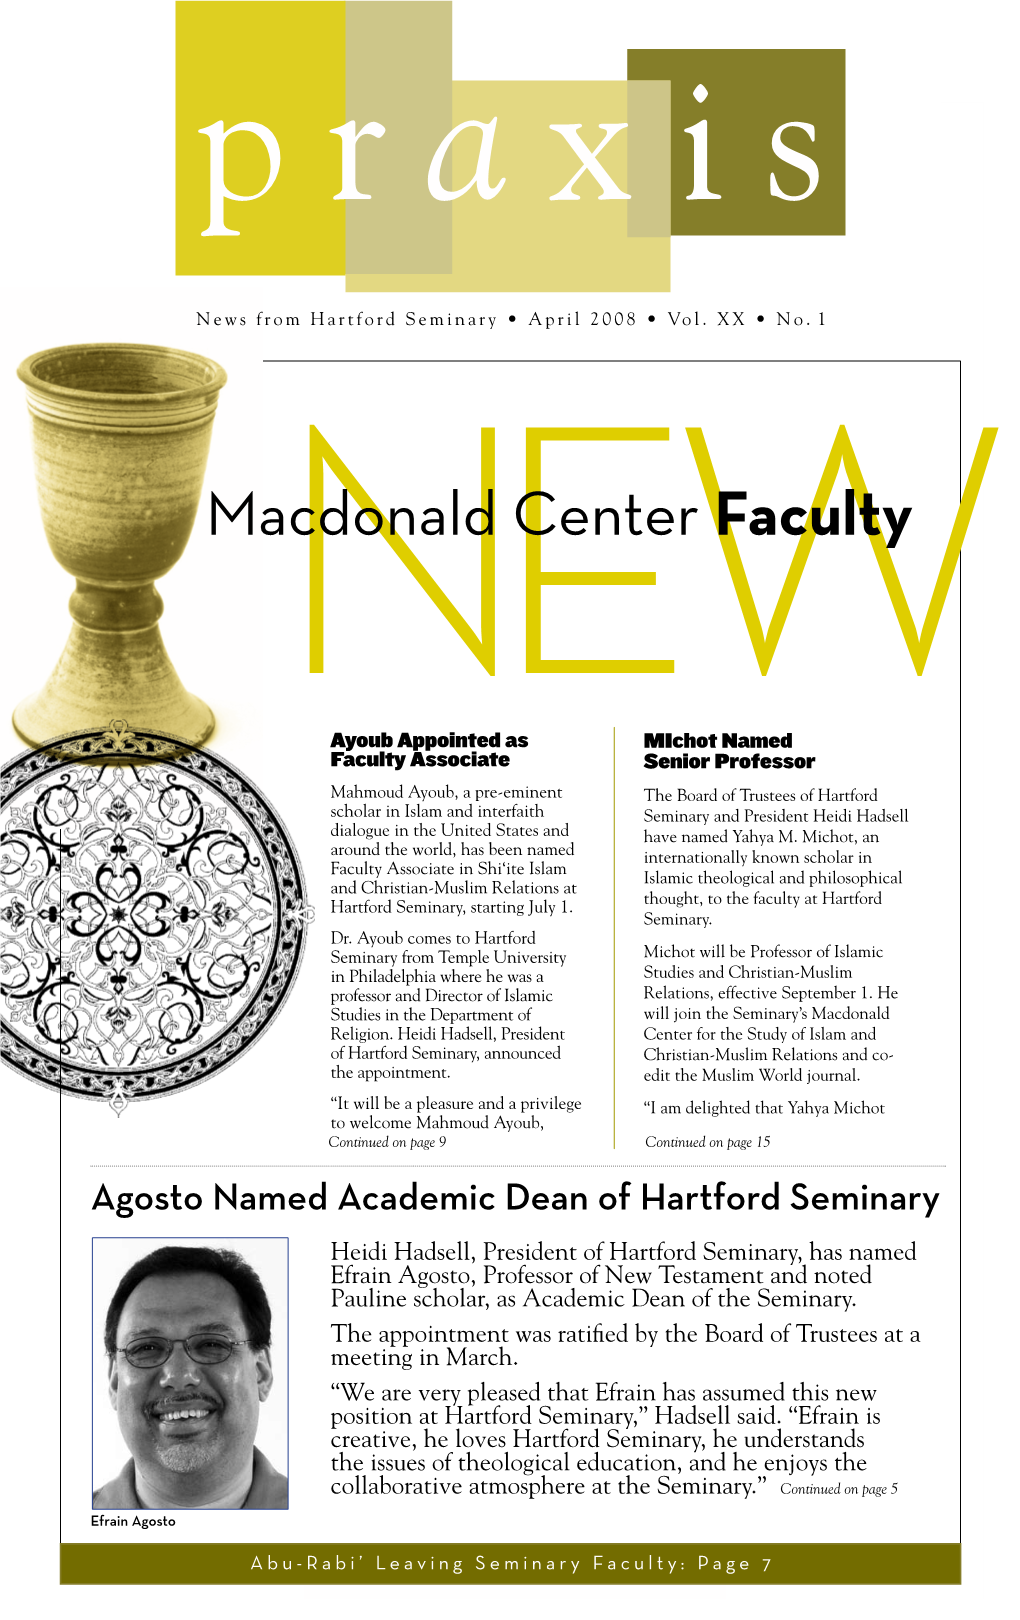 Macdonald Center Faculty